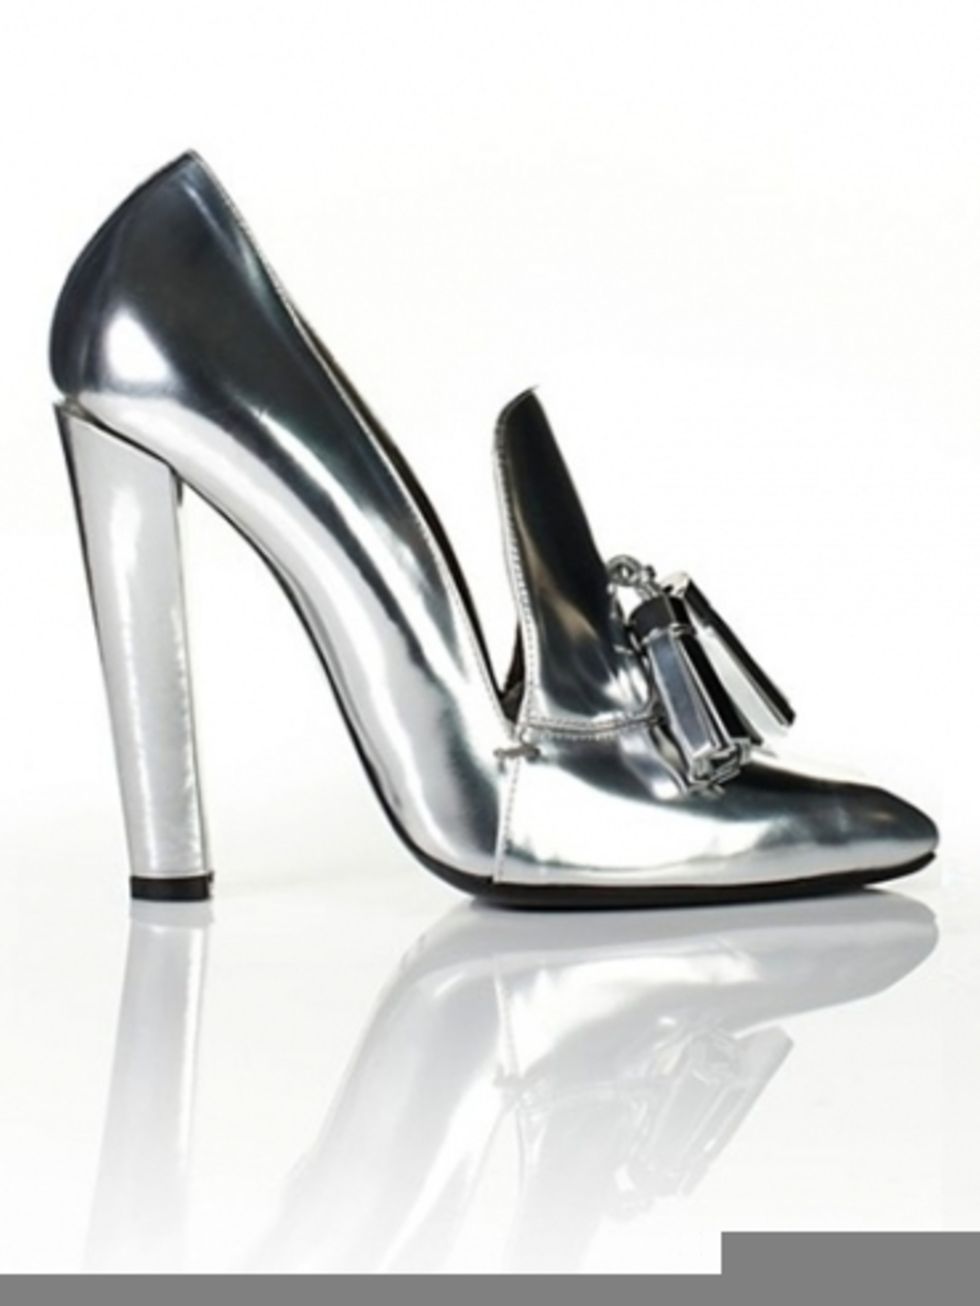 Footwear, High heels, White, Fashion, Black, Grey, Basic pump, Beige, Sandal, Material property, 